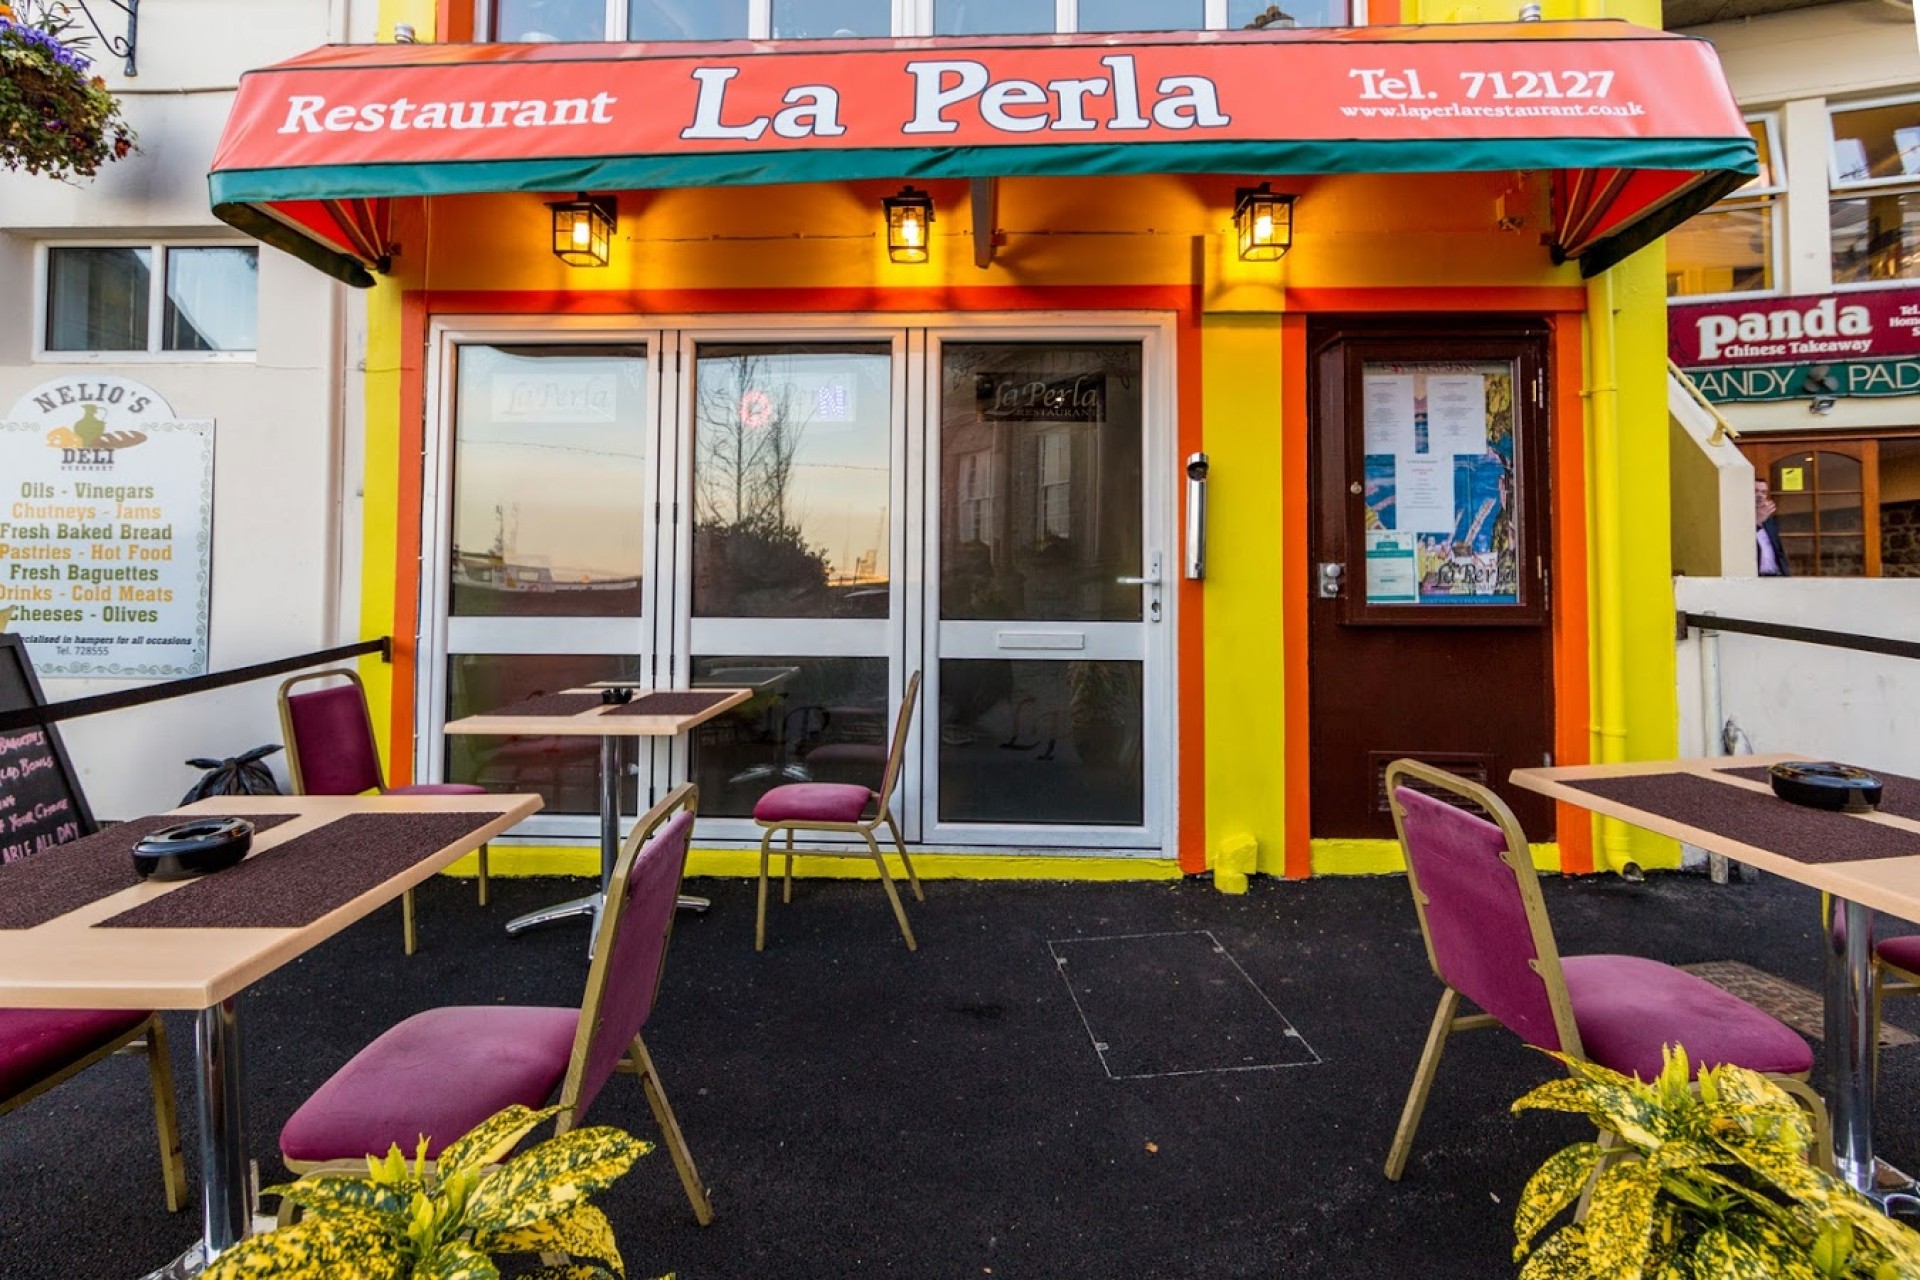 GY4 YOU - La Perla Restaurant